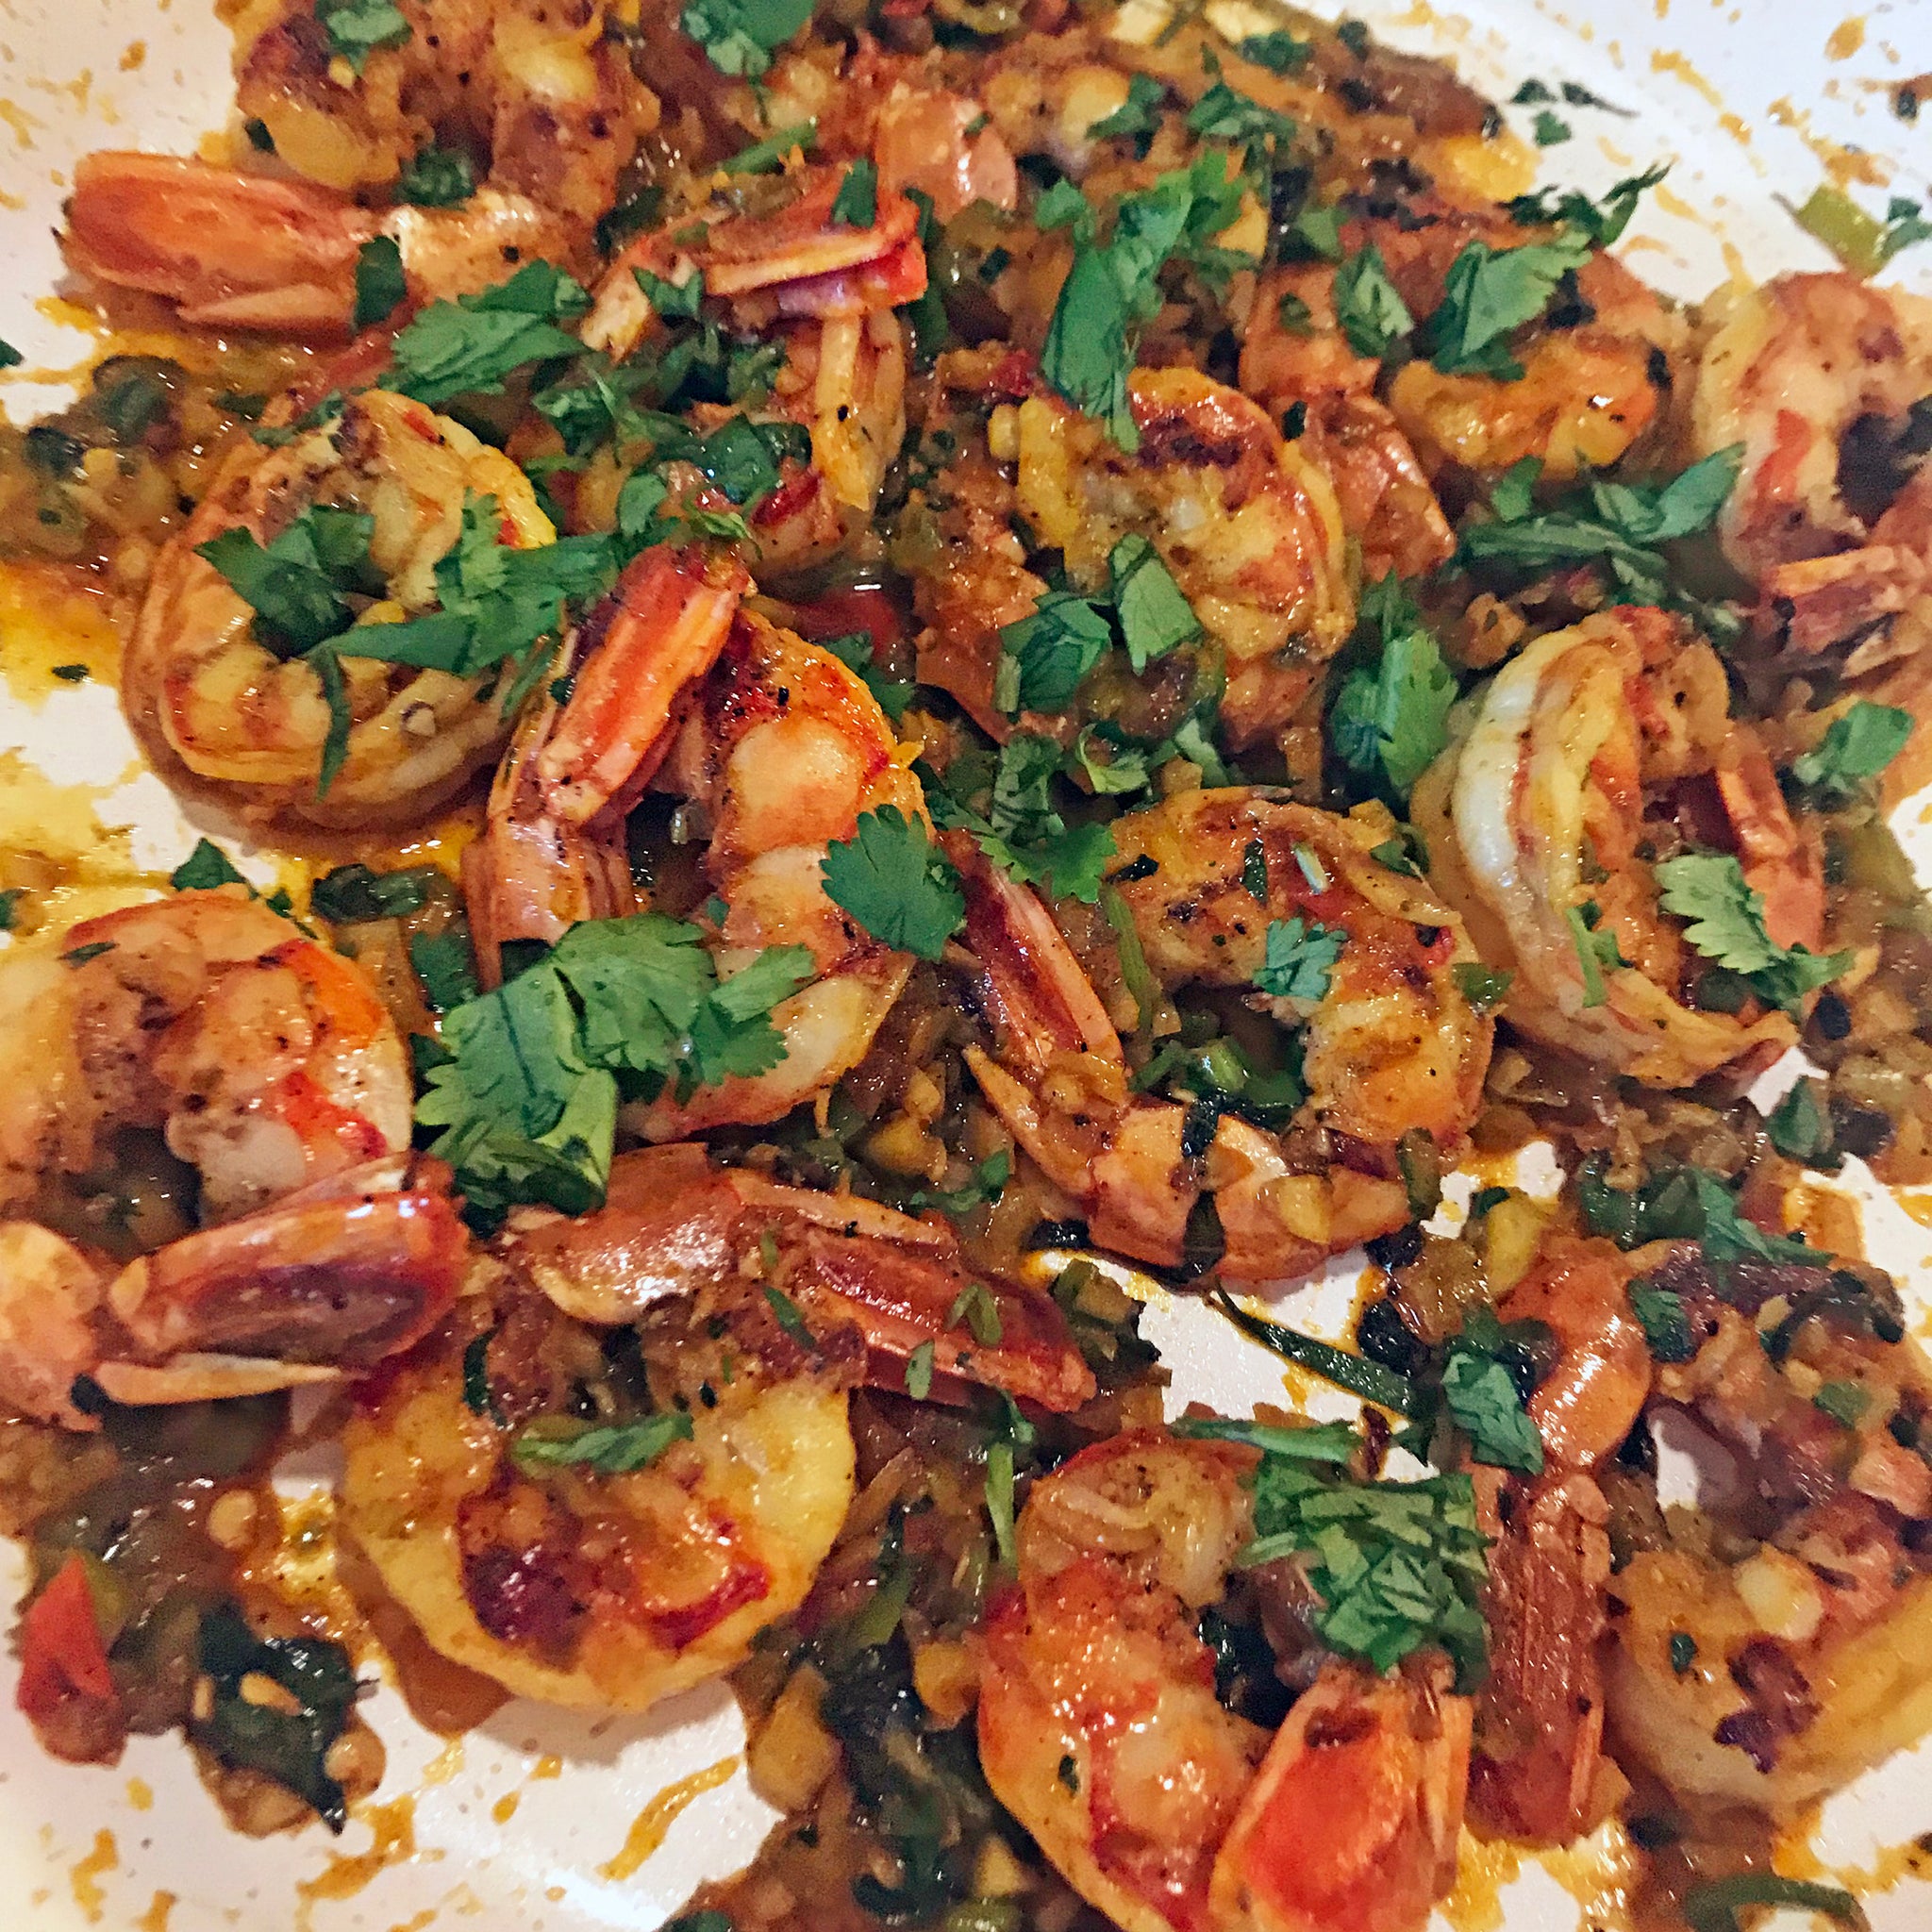 Mumbai Meal: Garlic and Chile Shrimp